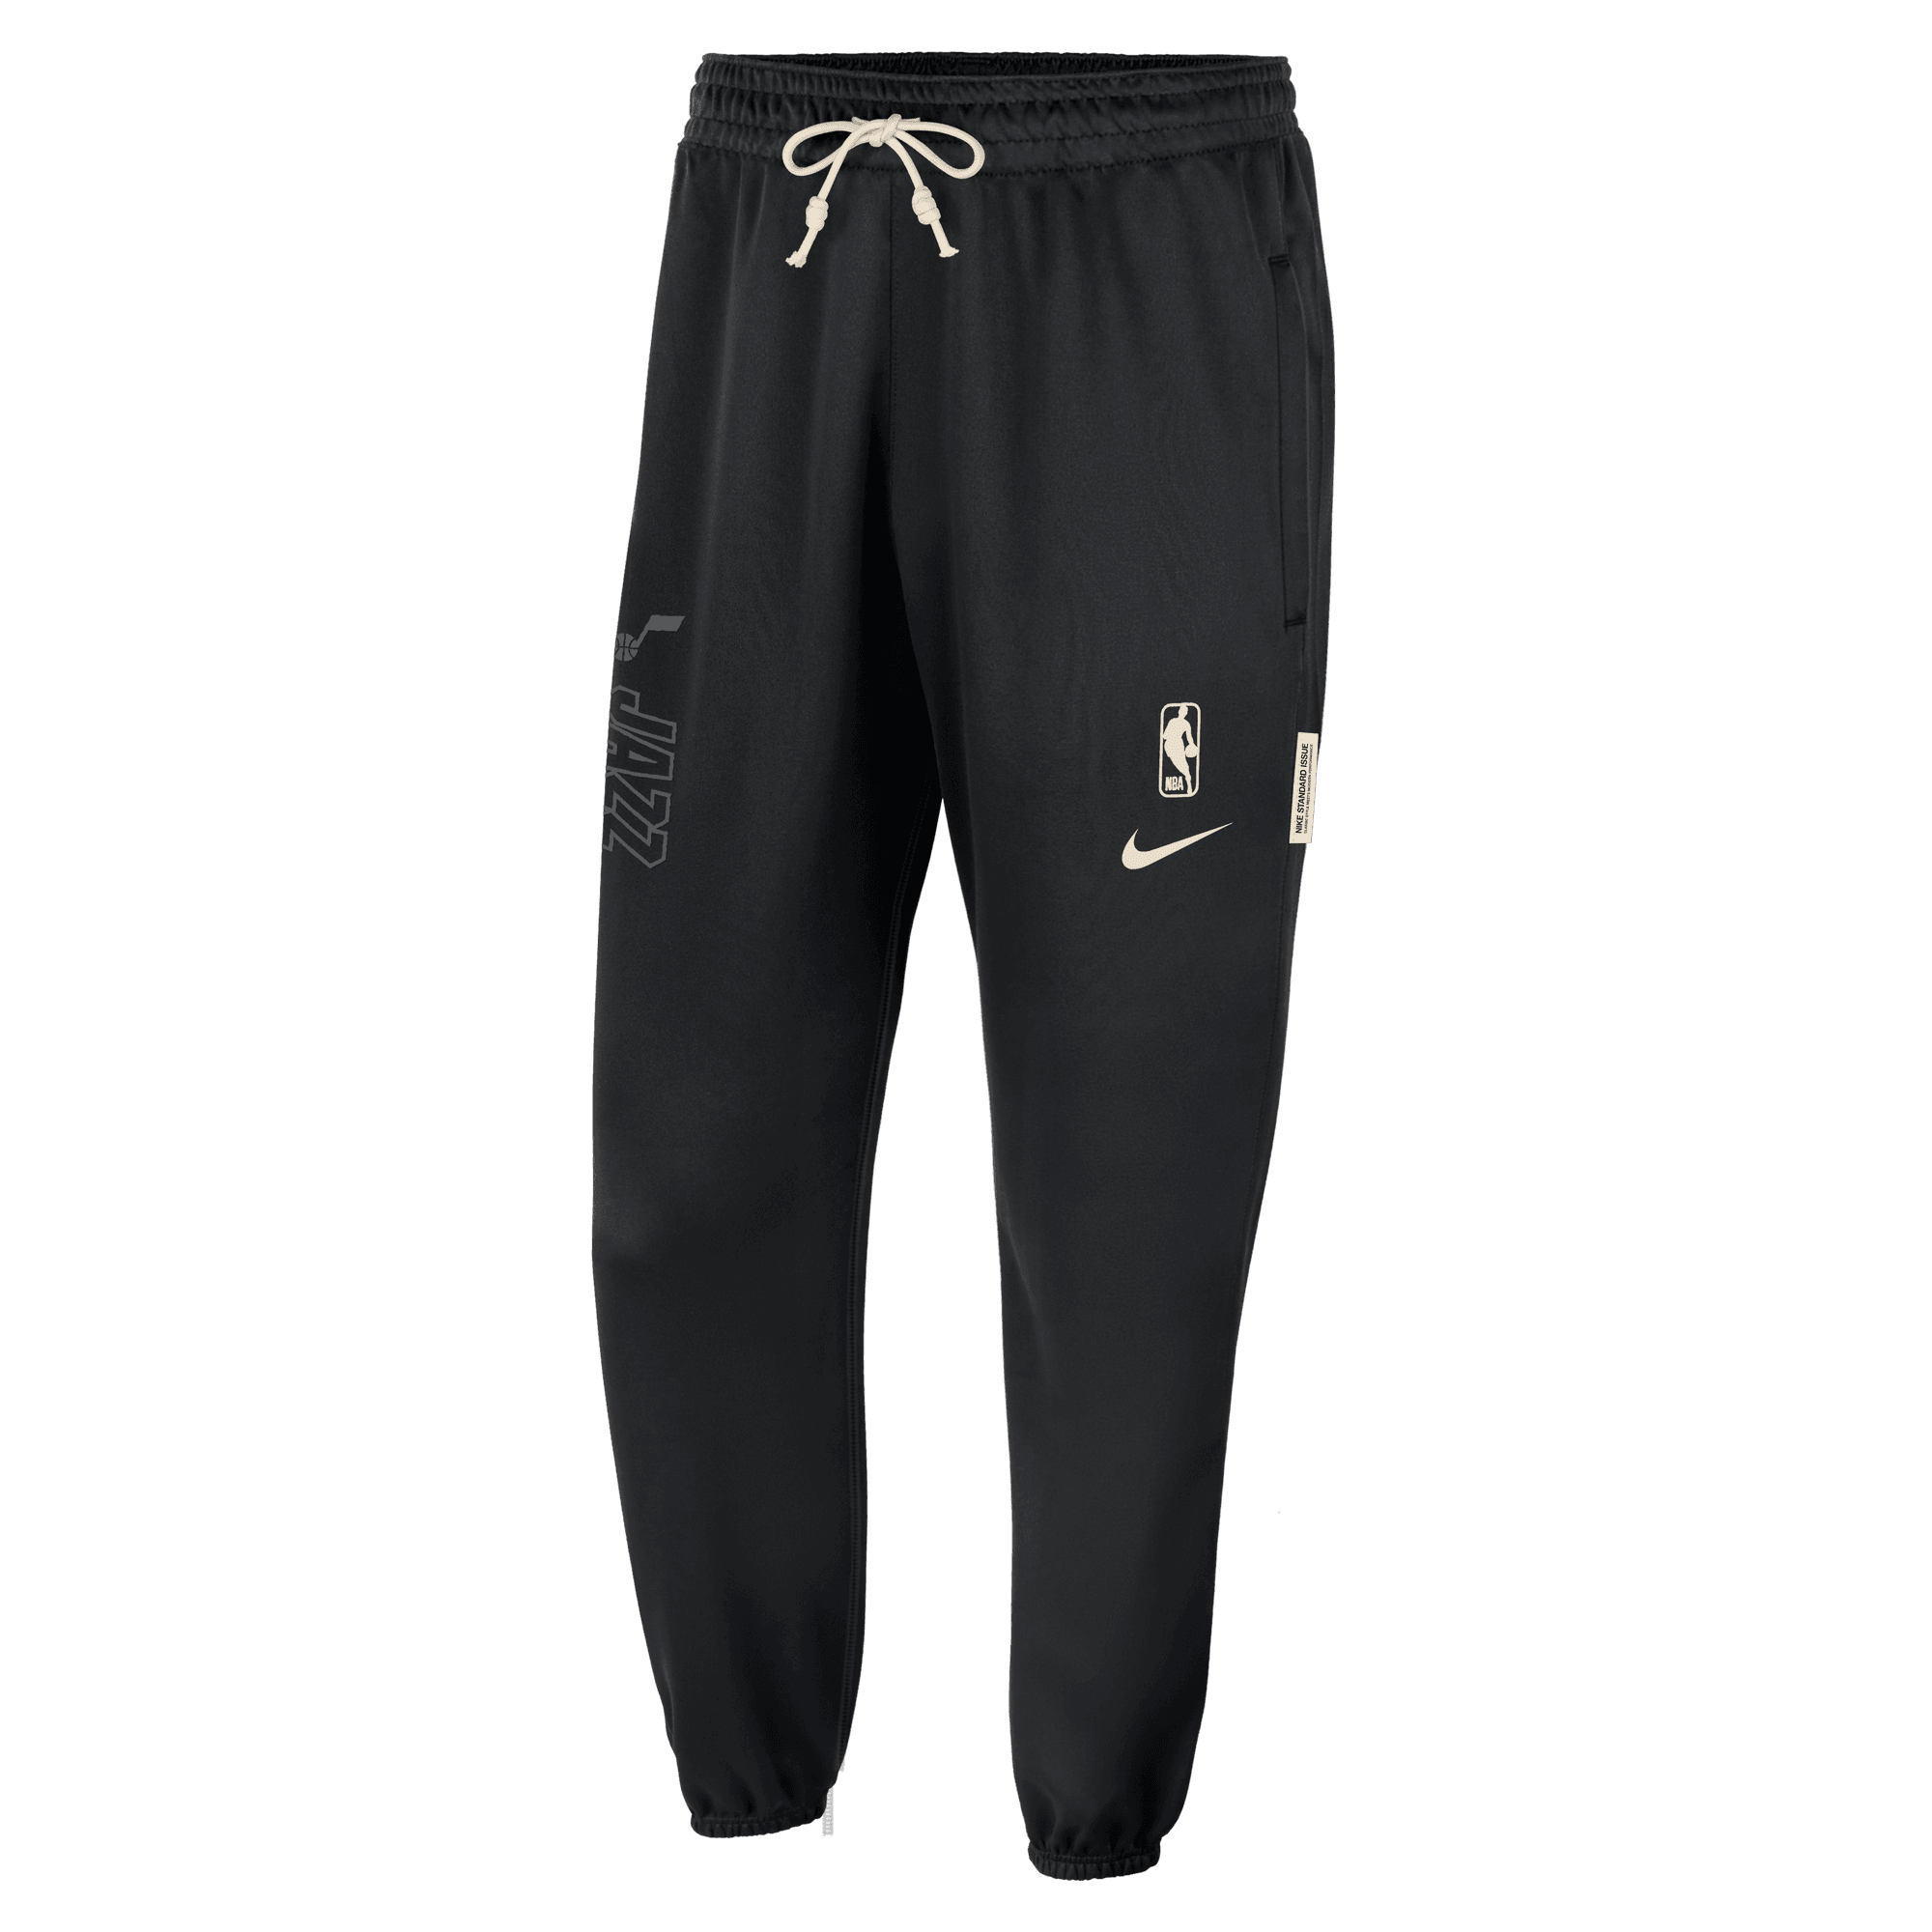 Lids Utah Jazz Concepts Sport Women's Mainstream Knit Jogger Pants - Navy